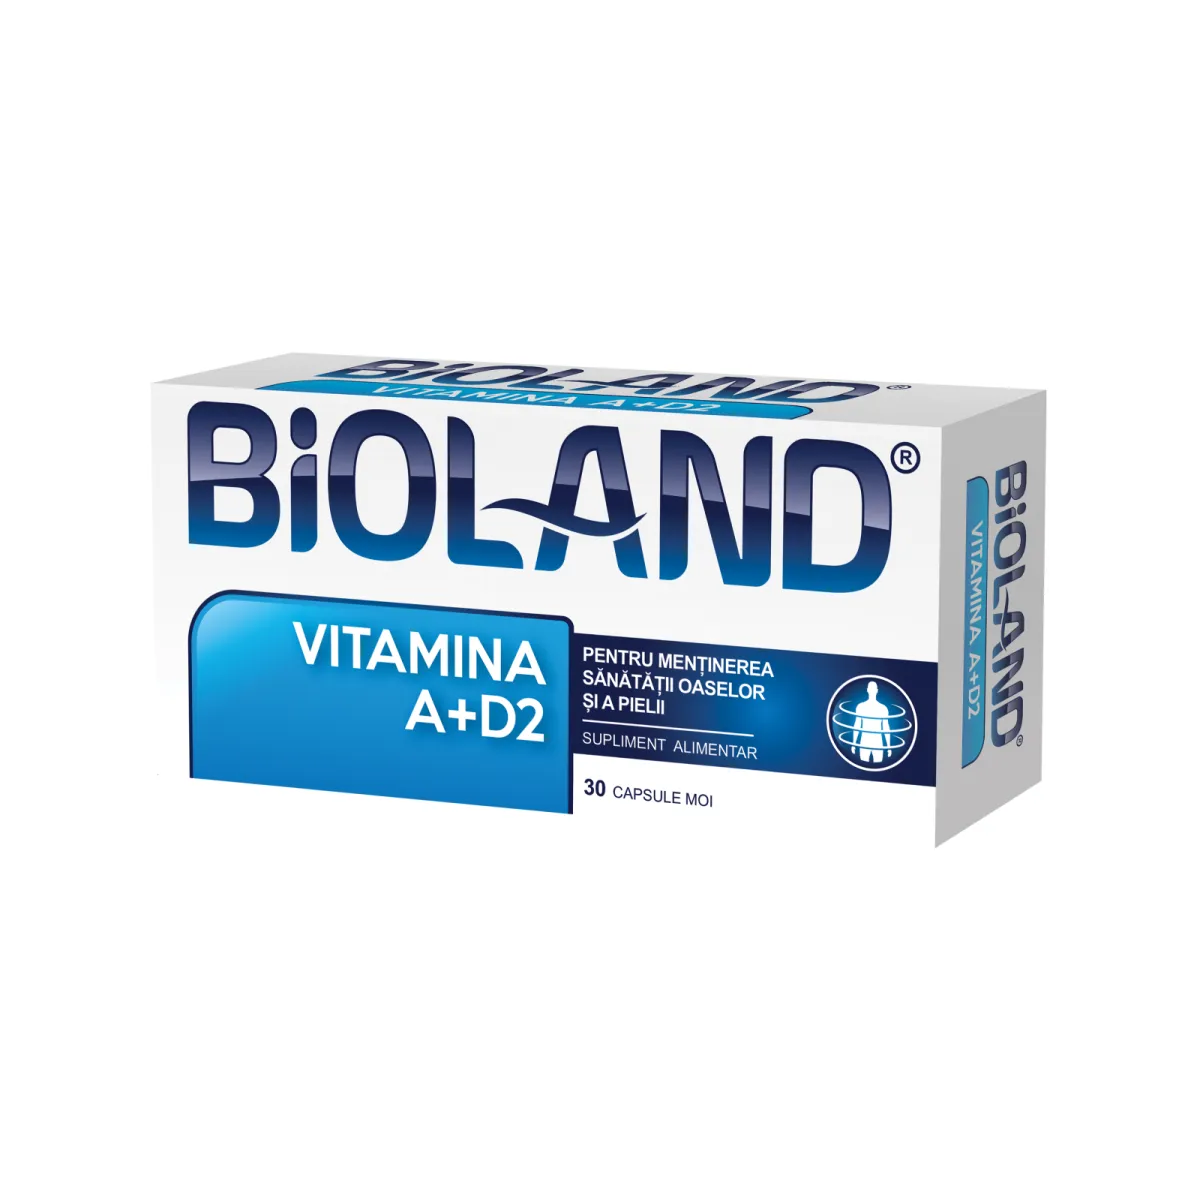 Vitamina A+D2 Bioland, 30 capsule moi, Biofarm